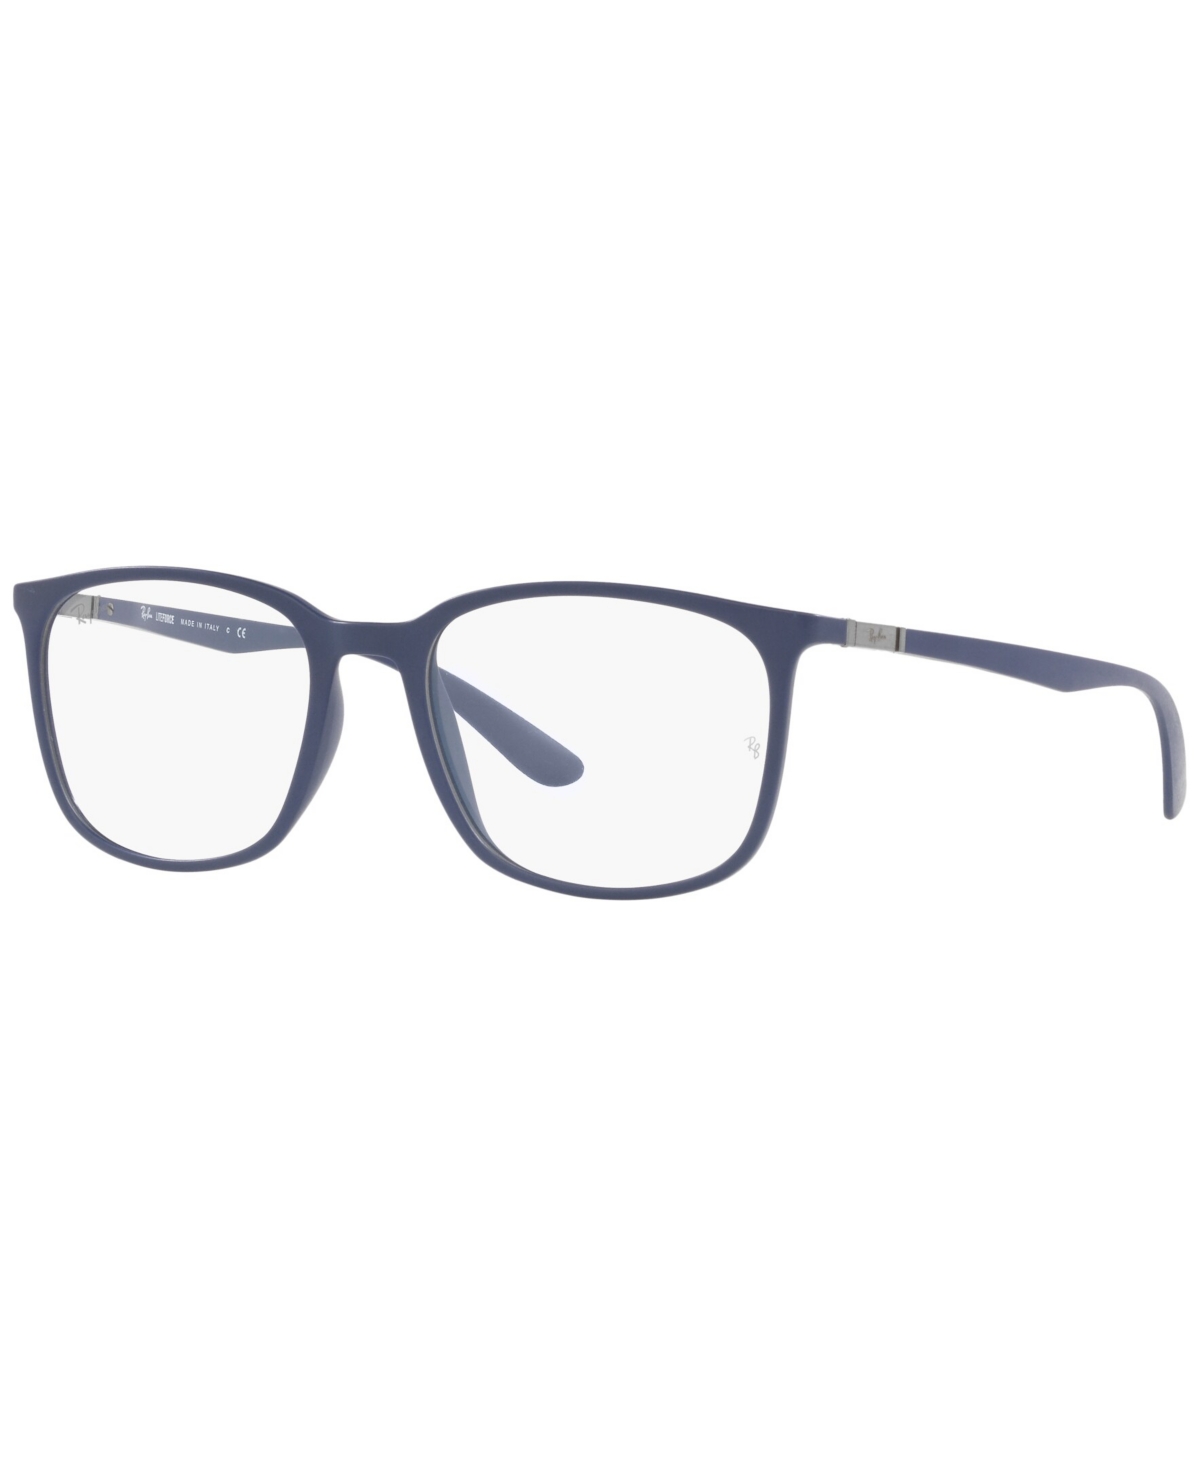 RX7199 Unisex Square Eyeglasses - Dark Blue